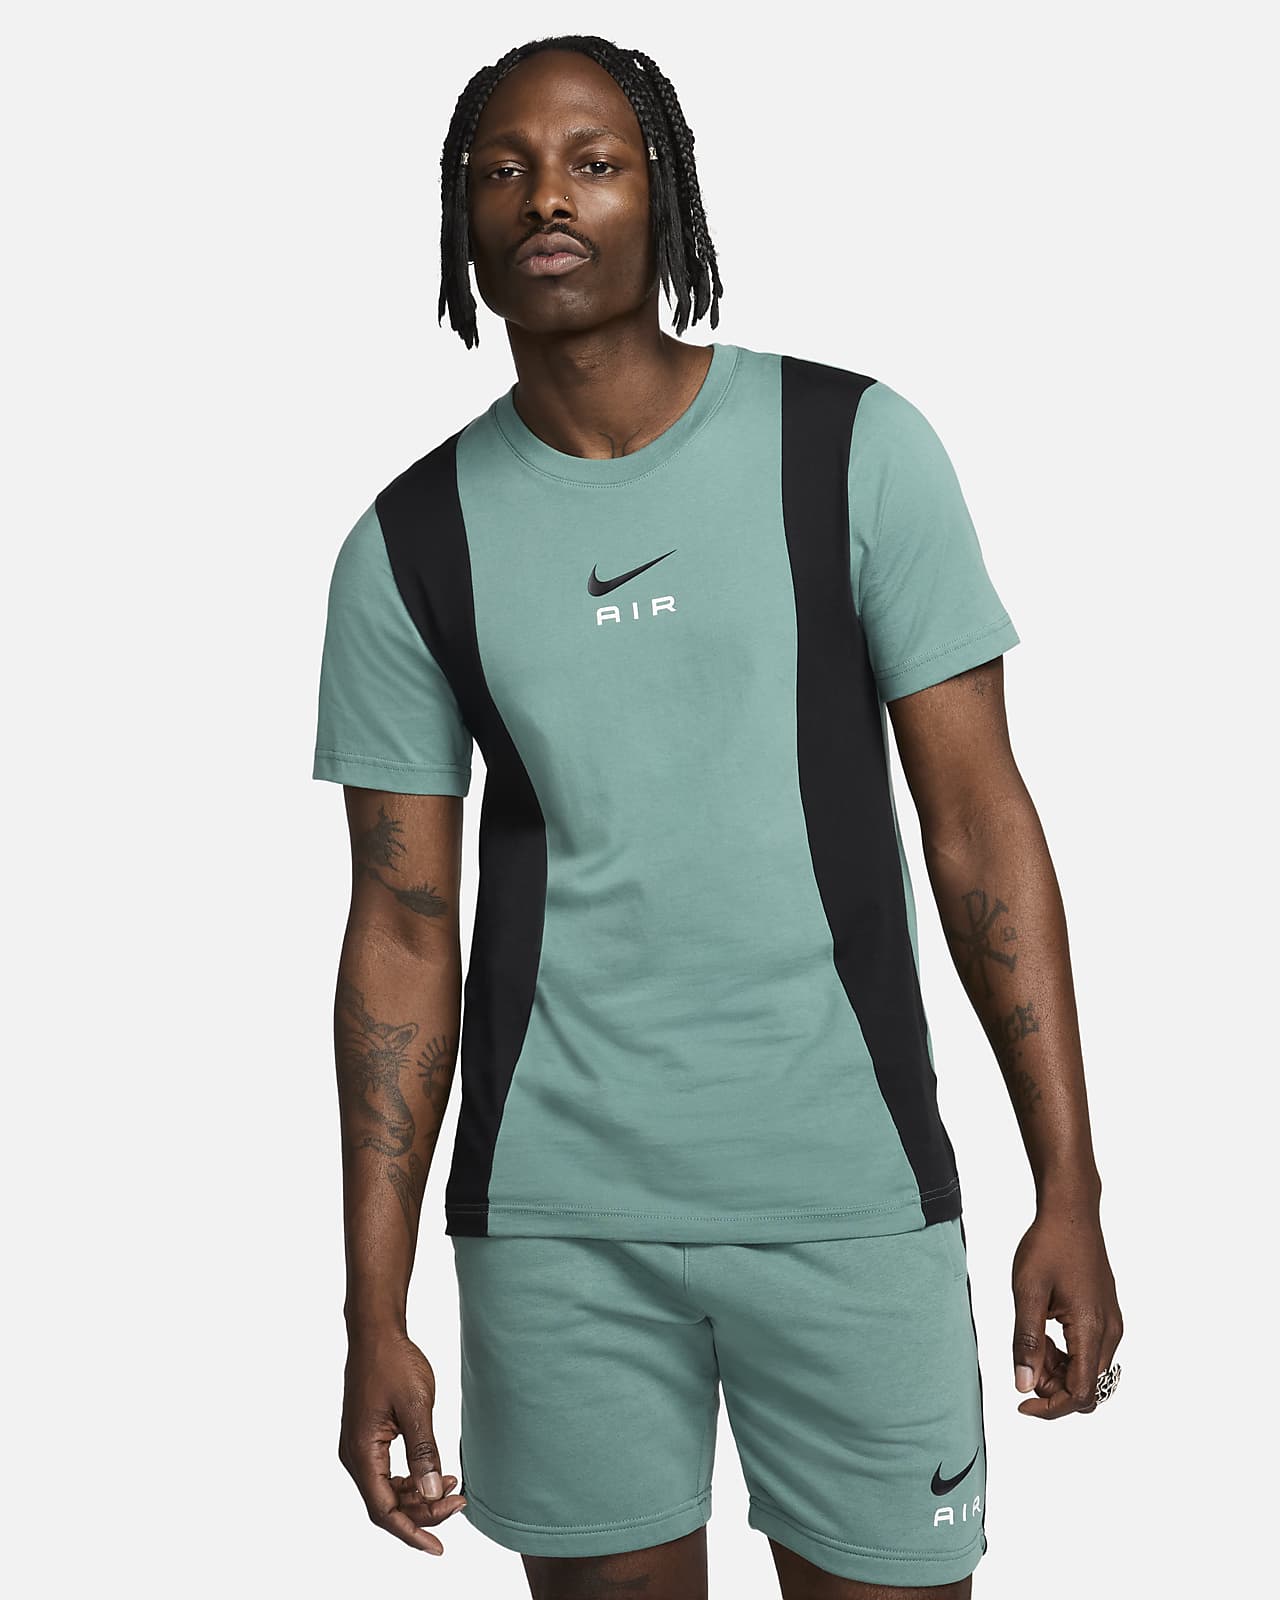 Kortärmad tröja Nike Air för män